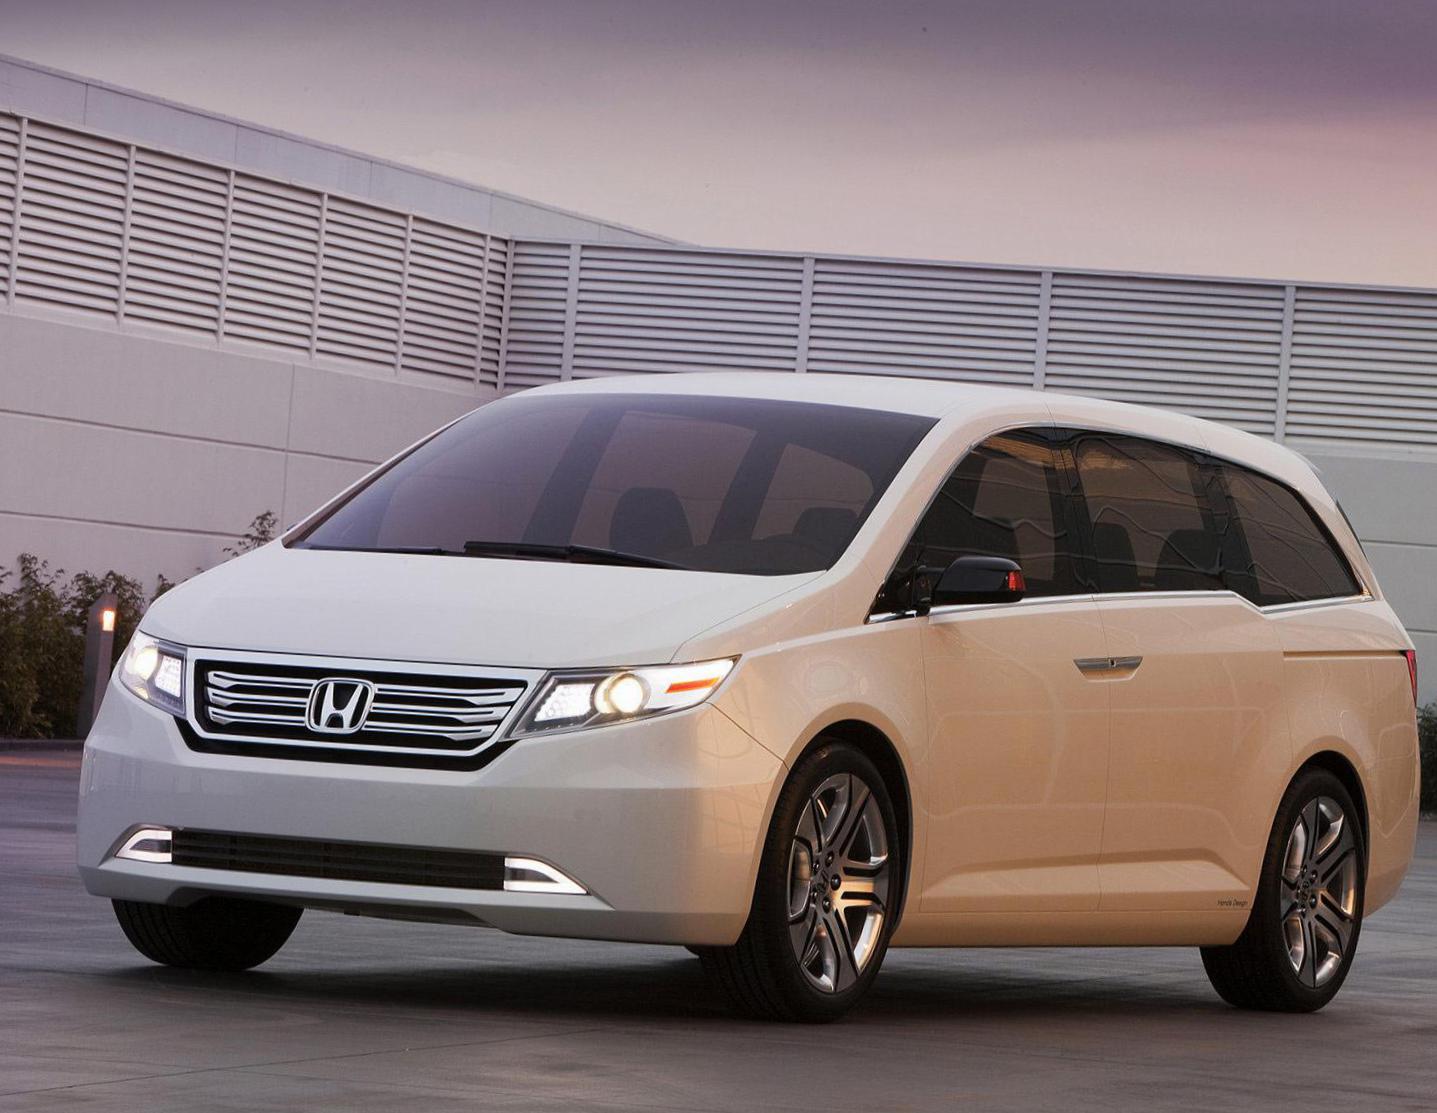 Odyssey Honda prices 2010